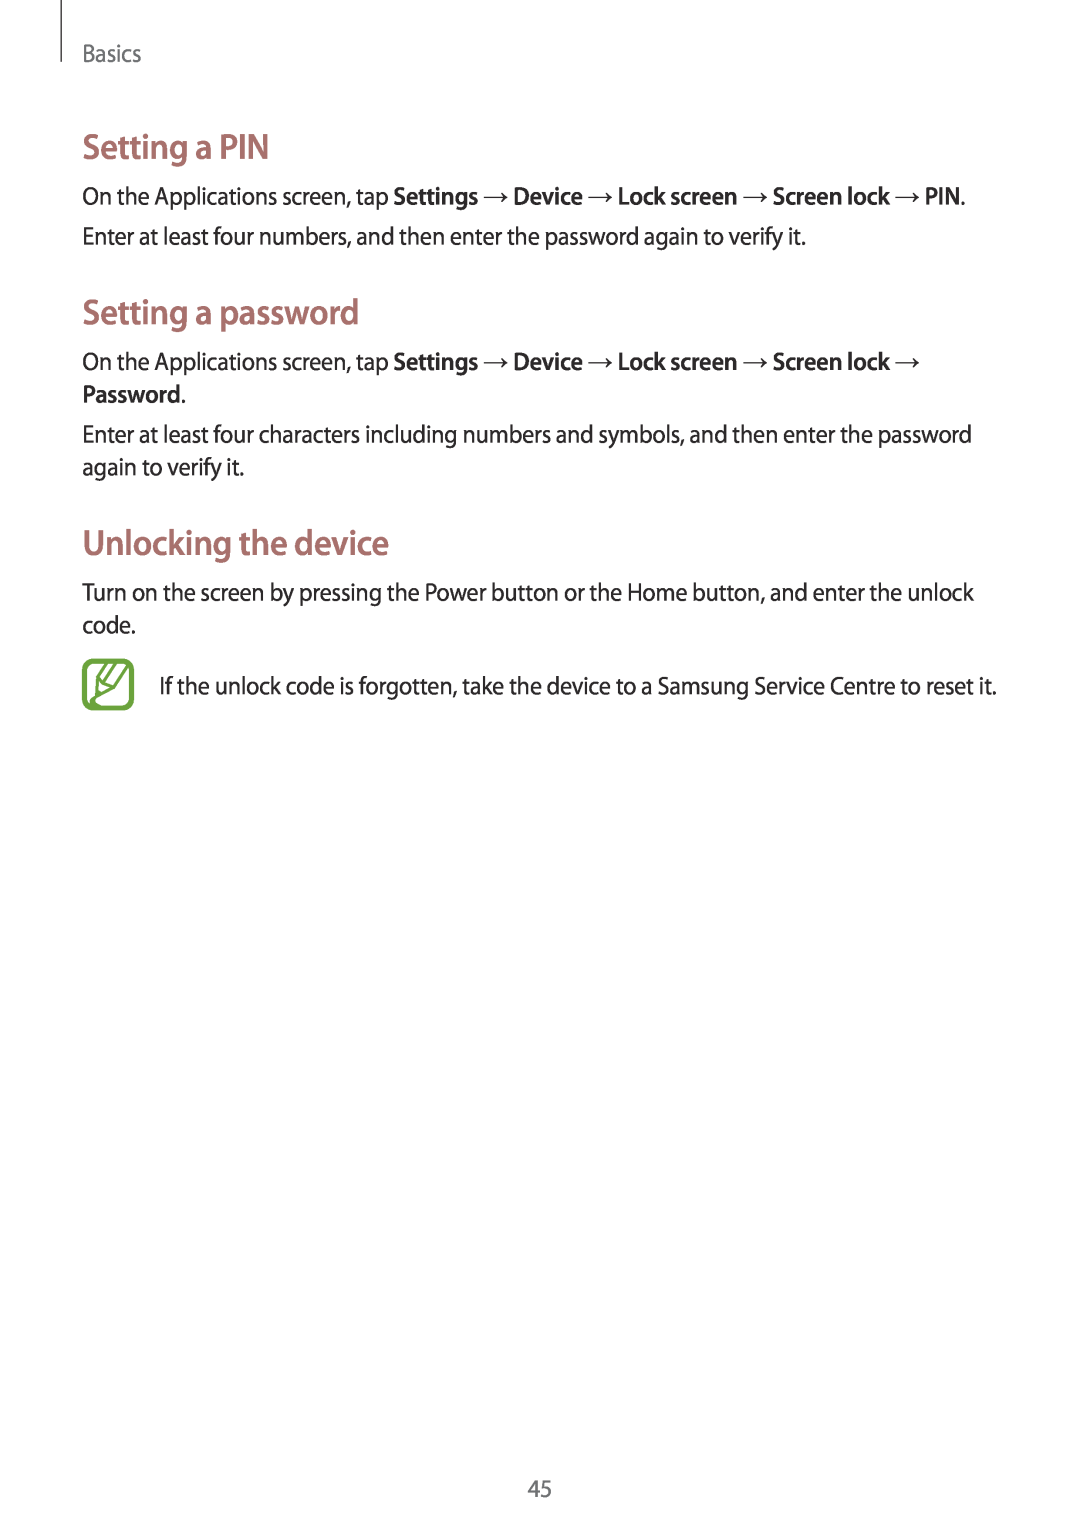 Samsung SM-P6000ZKAEUR, SM-P6000ZWAXEO, SM-P6000ZKEDBT manual Setting a PIN, Setting a password, Unlocking the device, Basics 